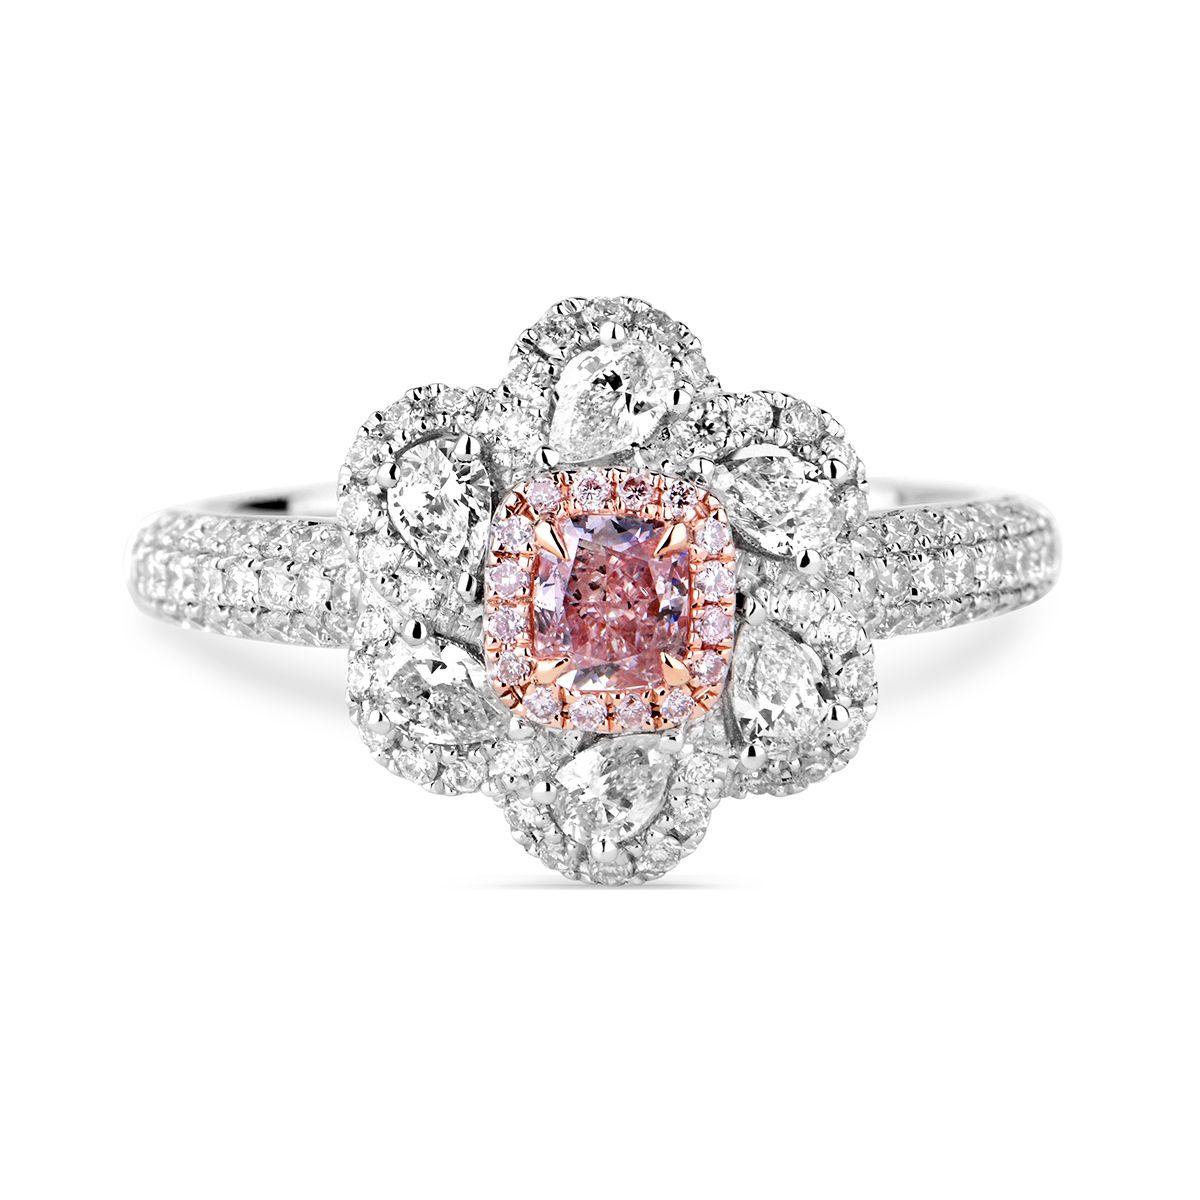 Very Light Pink Diamond Ring, 0.21 Ct. (0.97 Ct. TW), Cushion shape, GIA Certified, 5181029392